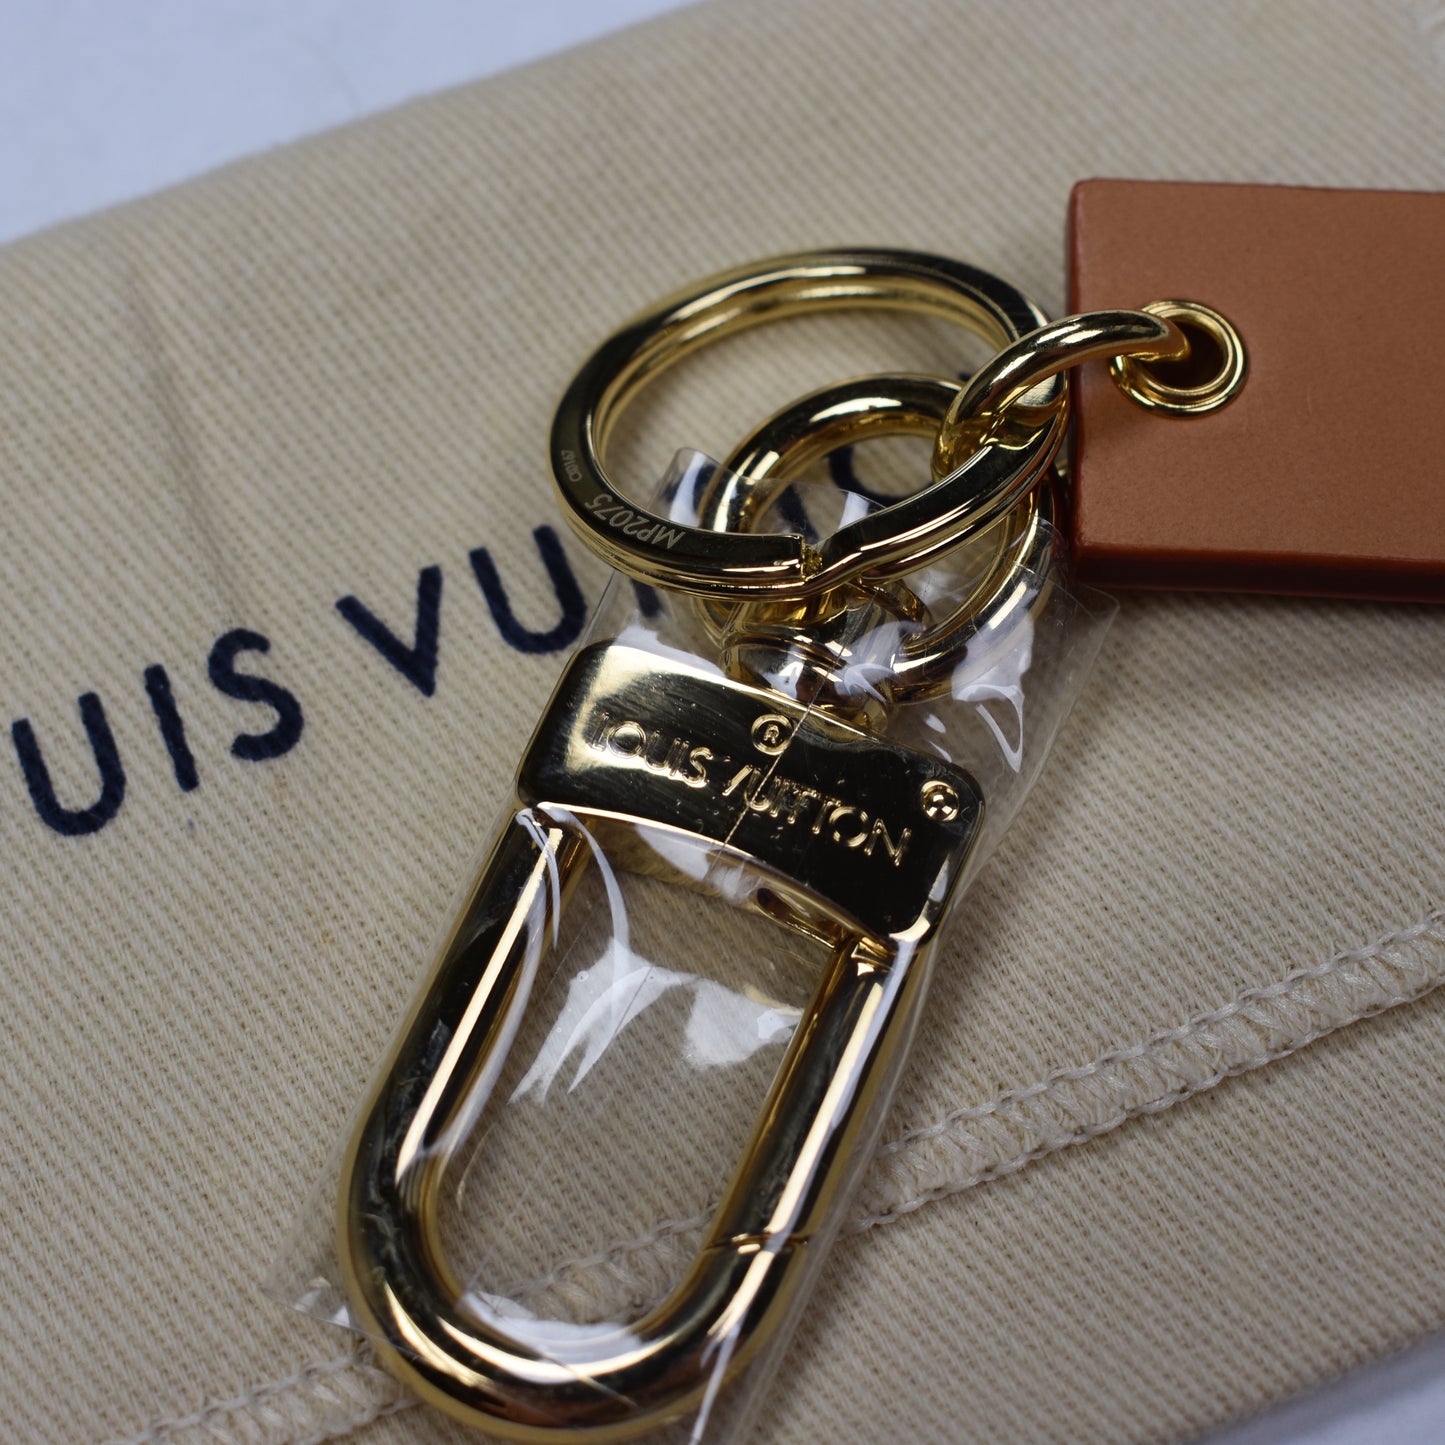 Louis Vuitton x Supreme - Leather Box Logo Keychain